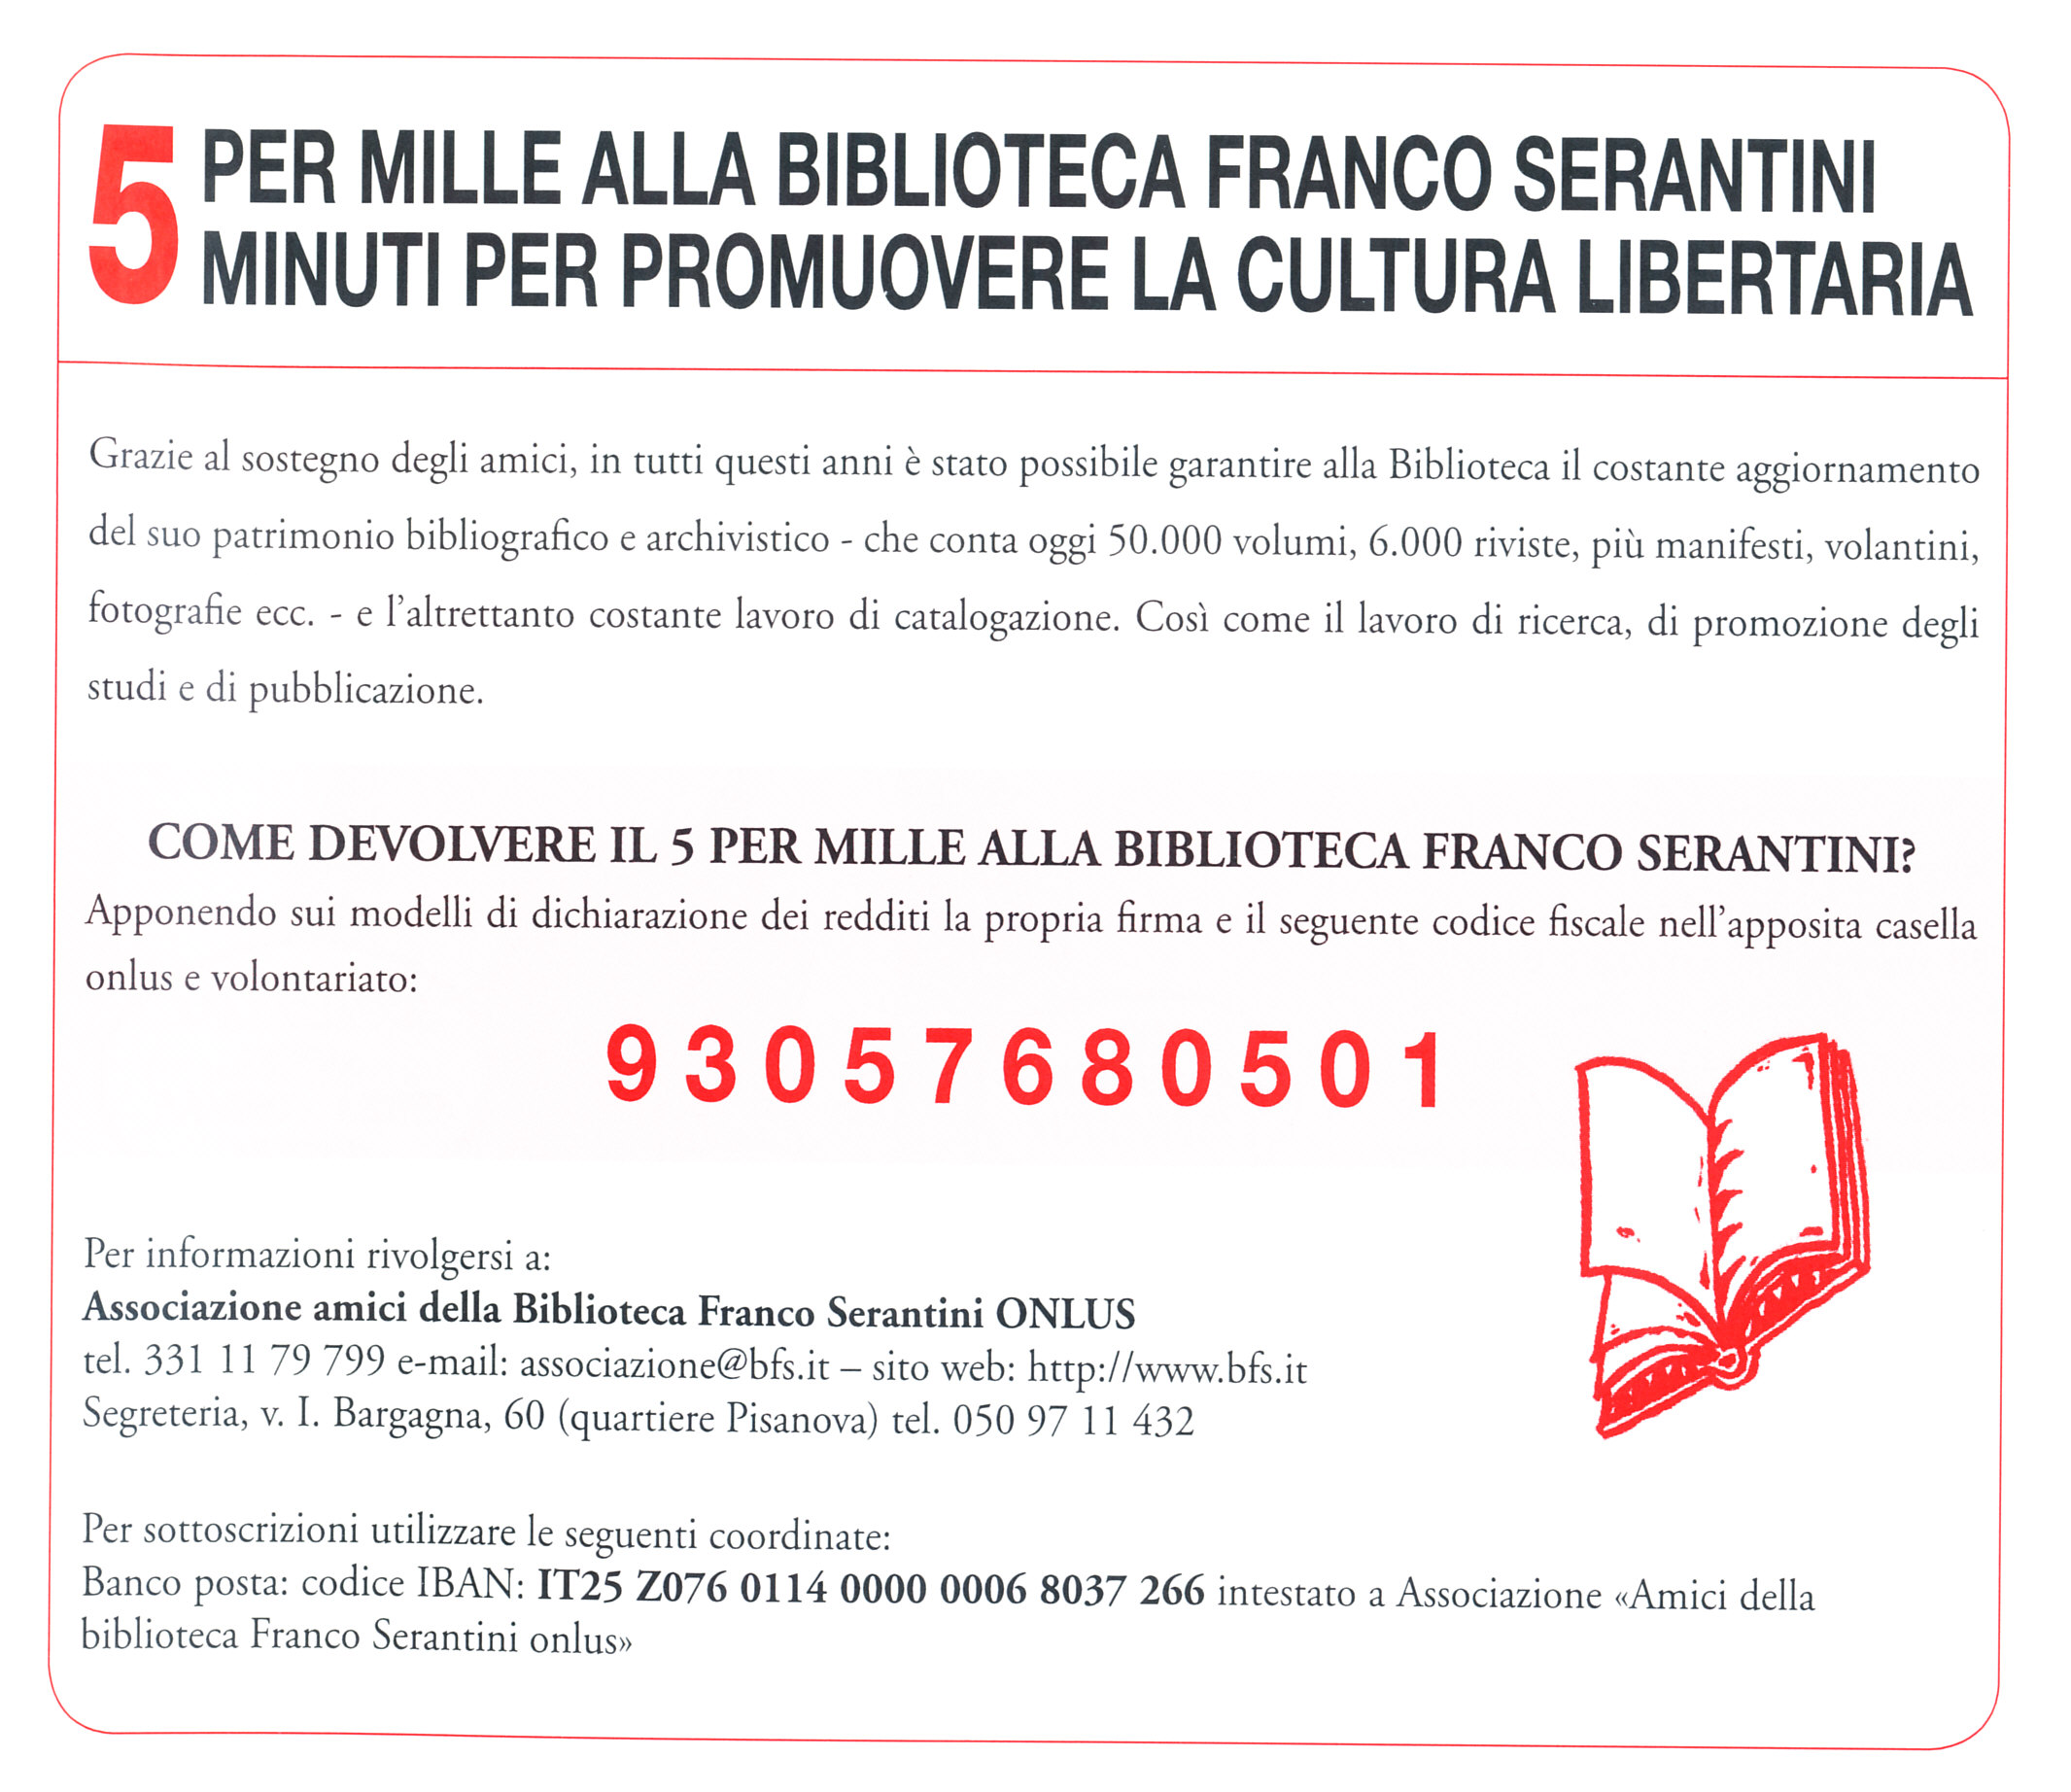 5xmille alla Biblioteca Franco Serantini